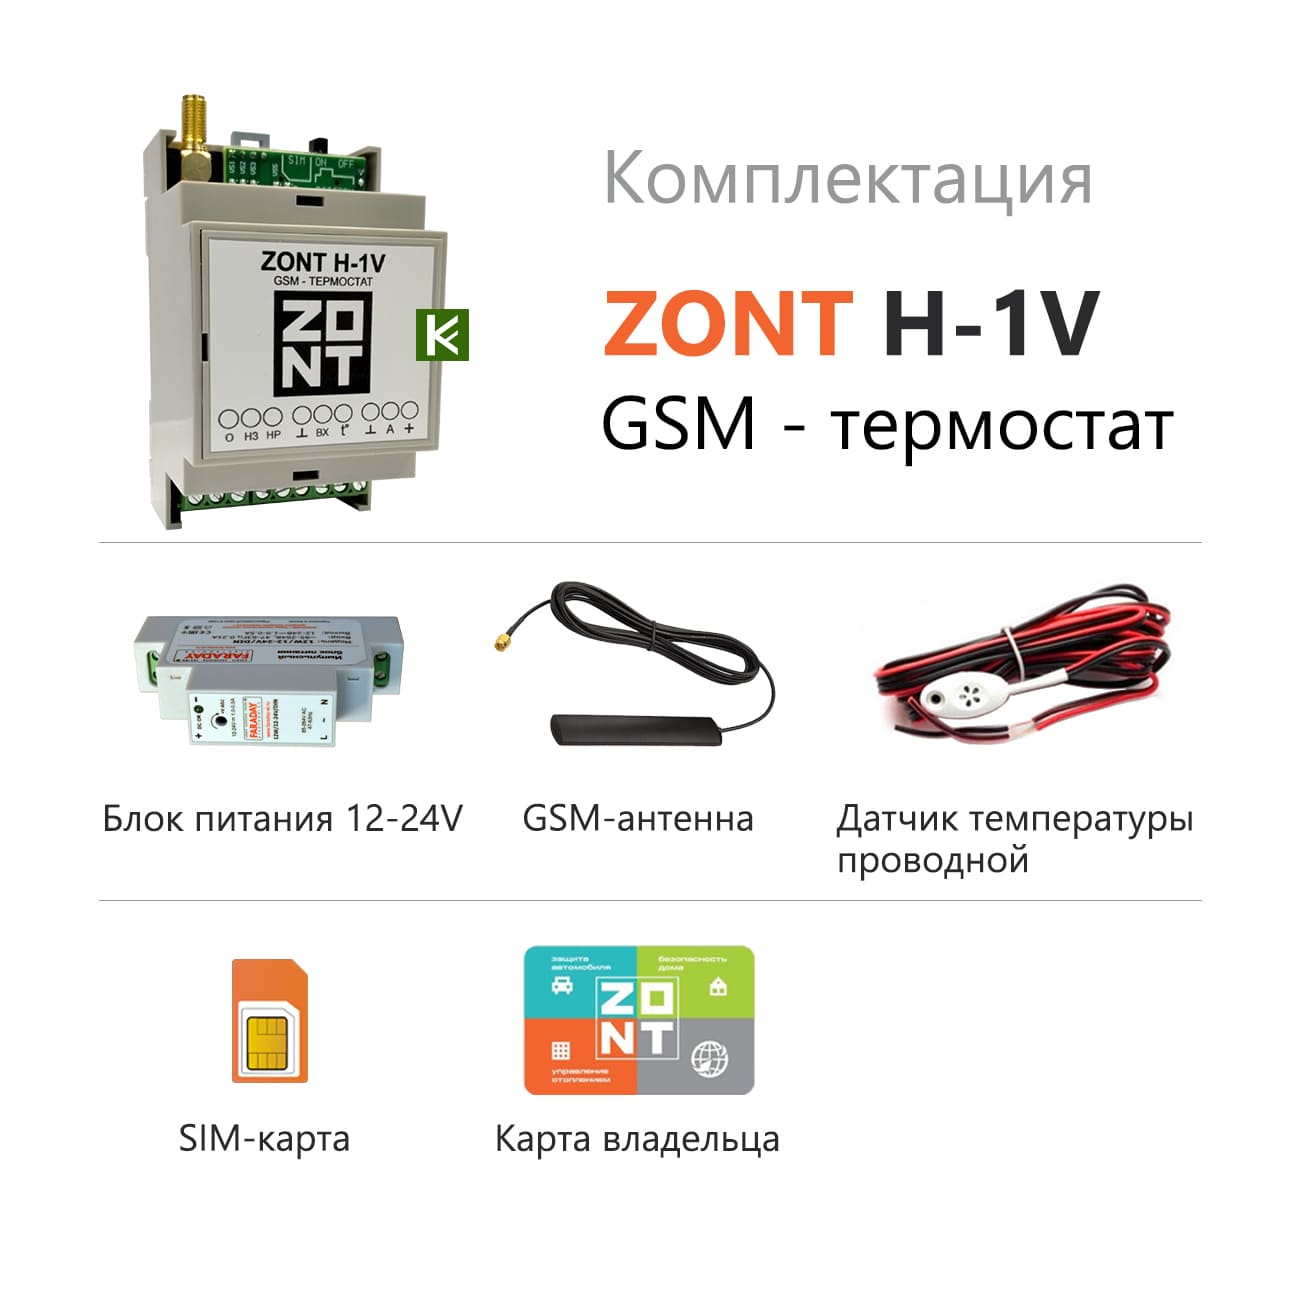 Zont eco. GSM-термостат Zont h-1v. Термостат GSM-climate Zont-h1. Термостат GSM-climate Zont-h1 (112015). GSM-термостат Zont h-1.